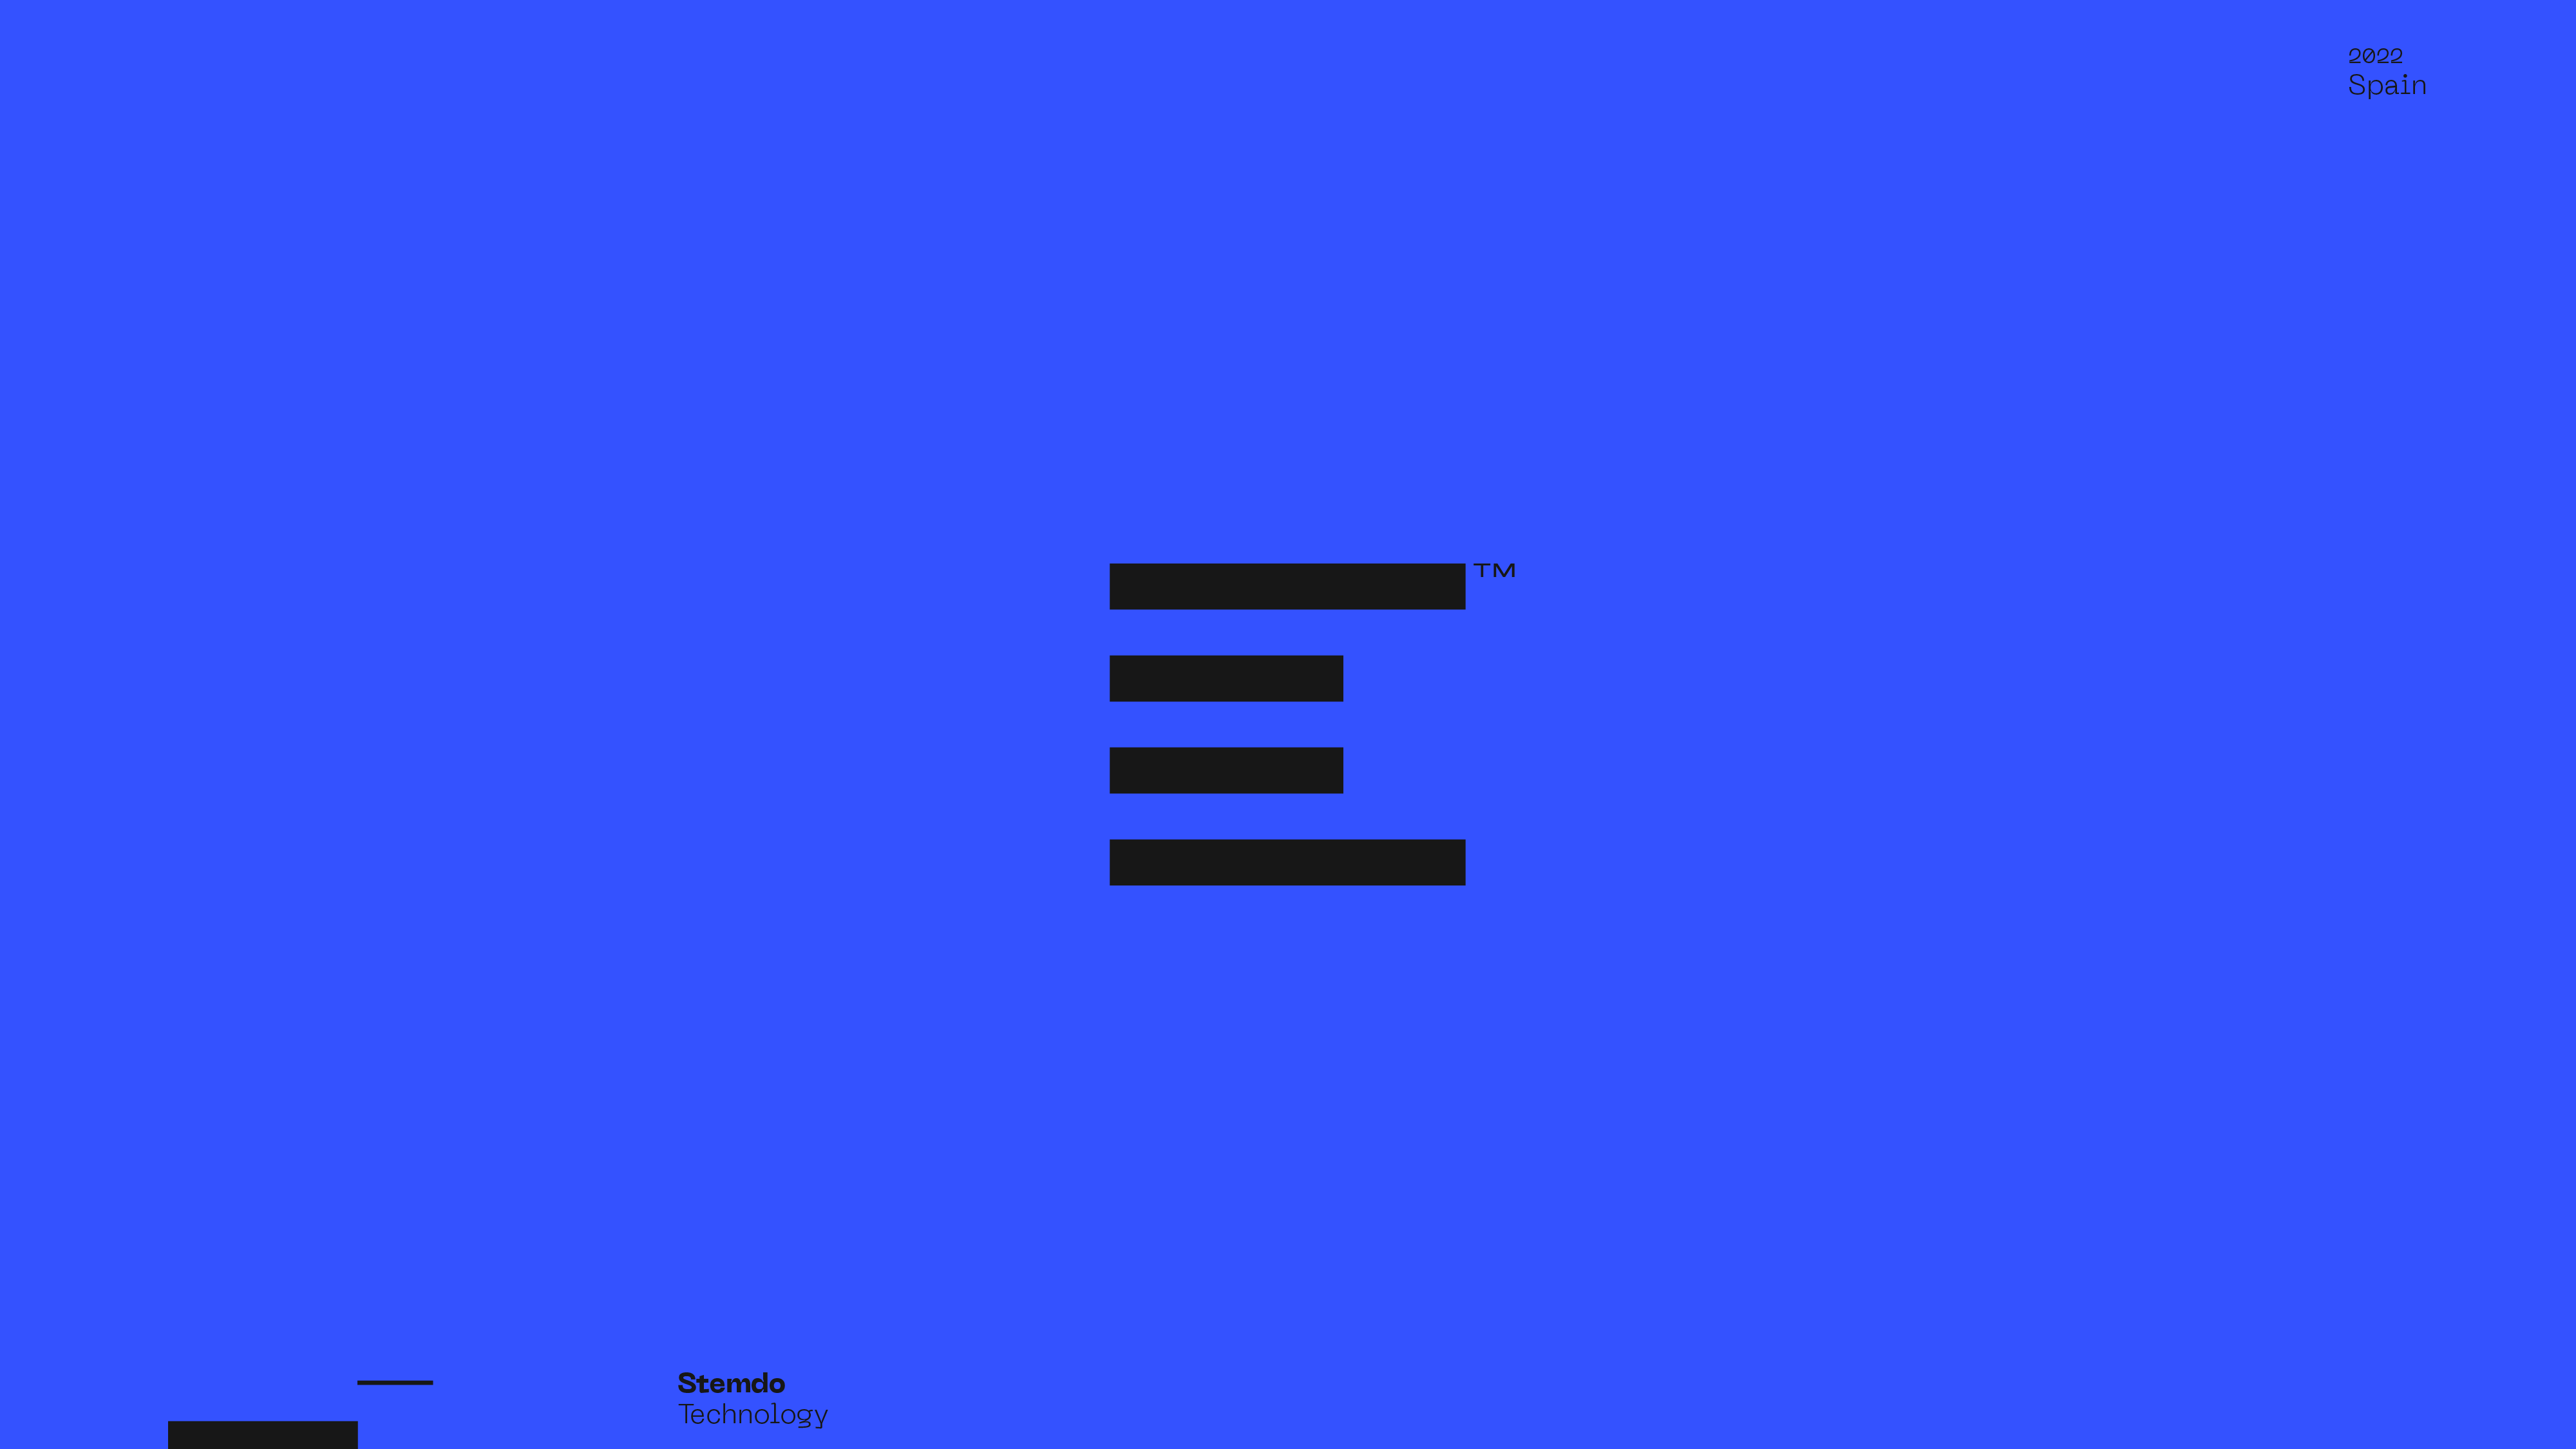 Guapo Design Studio by Esteban Ibarra Logofolio 2022 logo designer — Stemdo